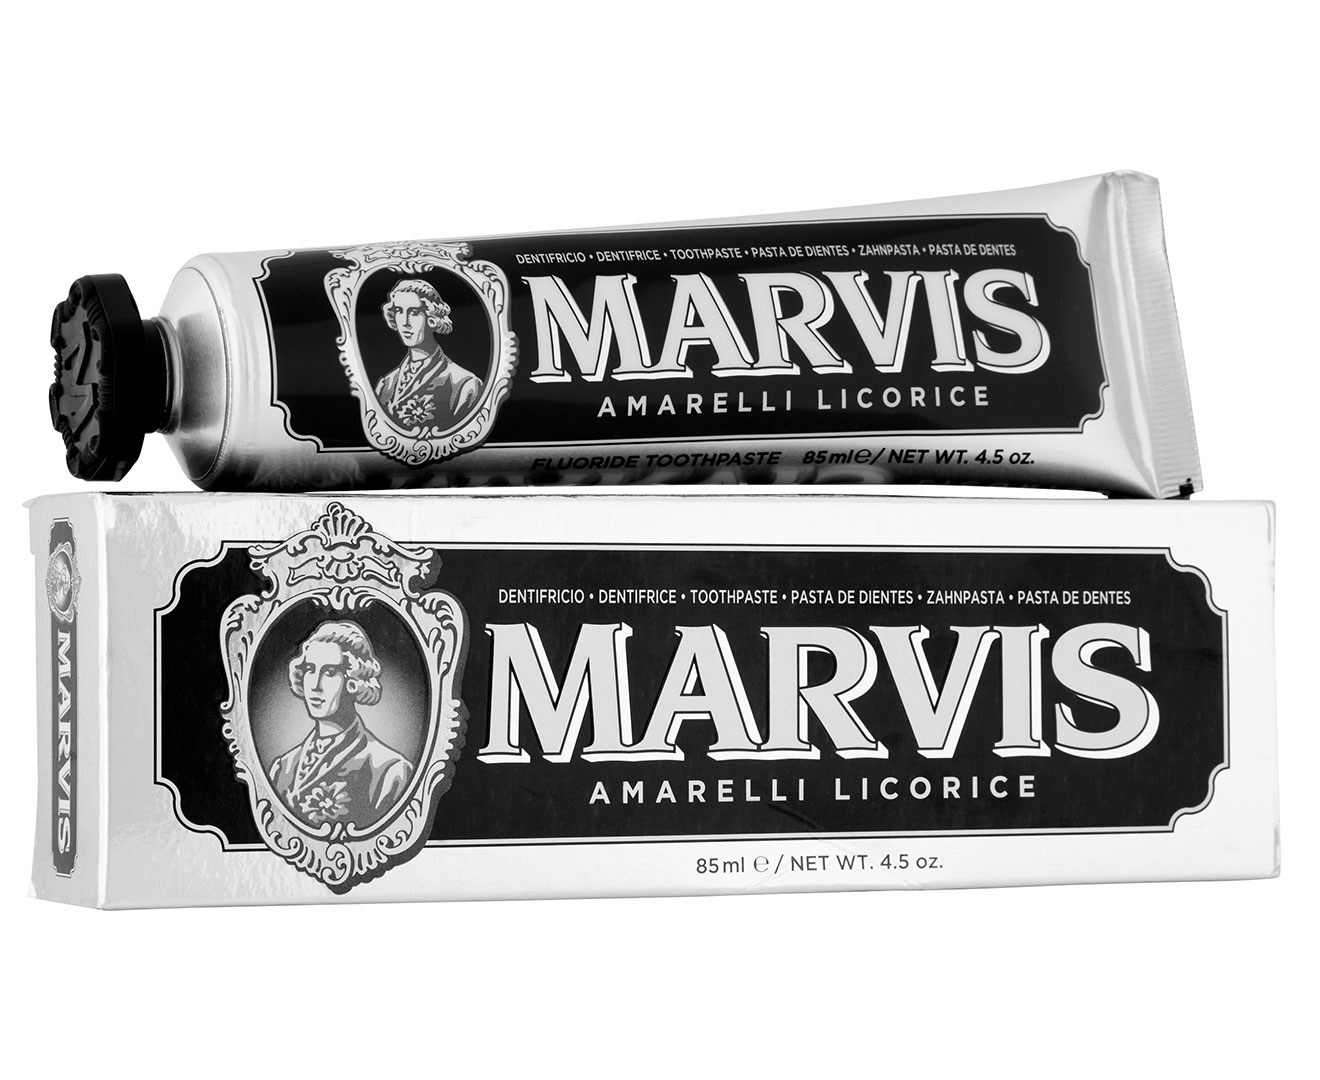 Marvis Amarelli Licorice 85ml